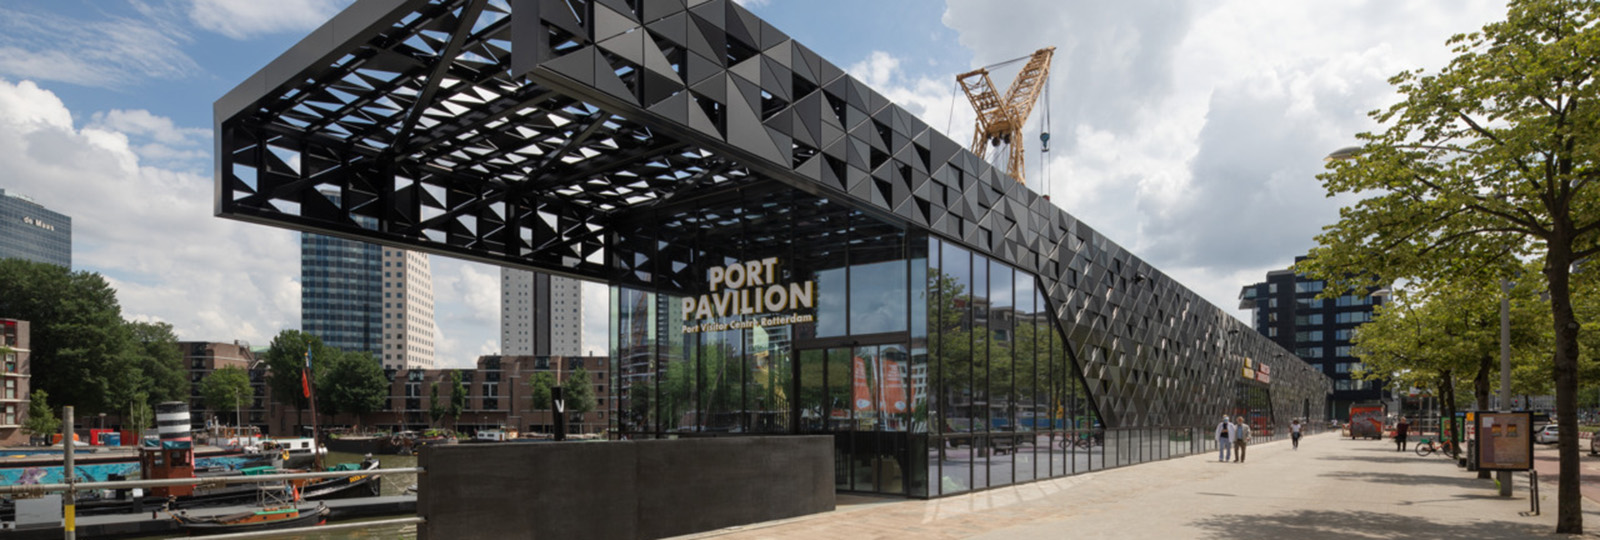 Leuve-Pavilion, Rotterdam